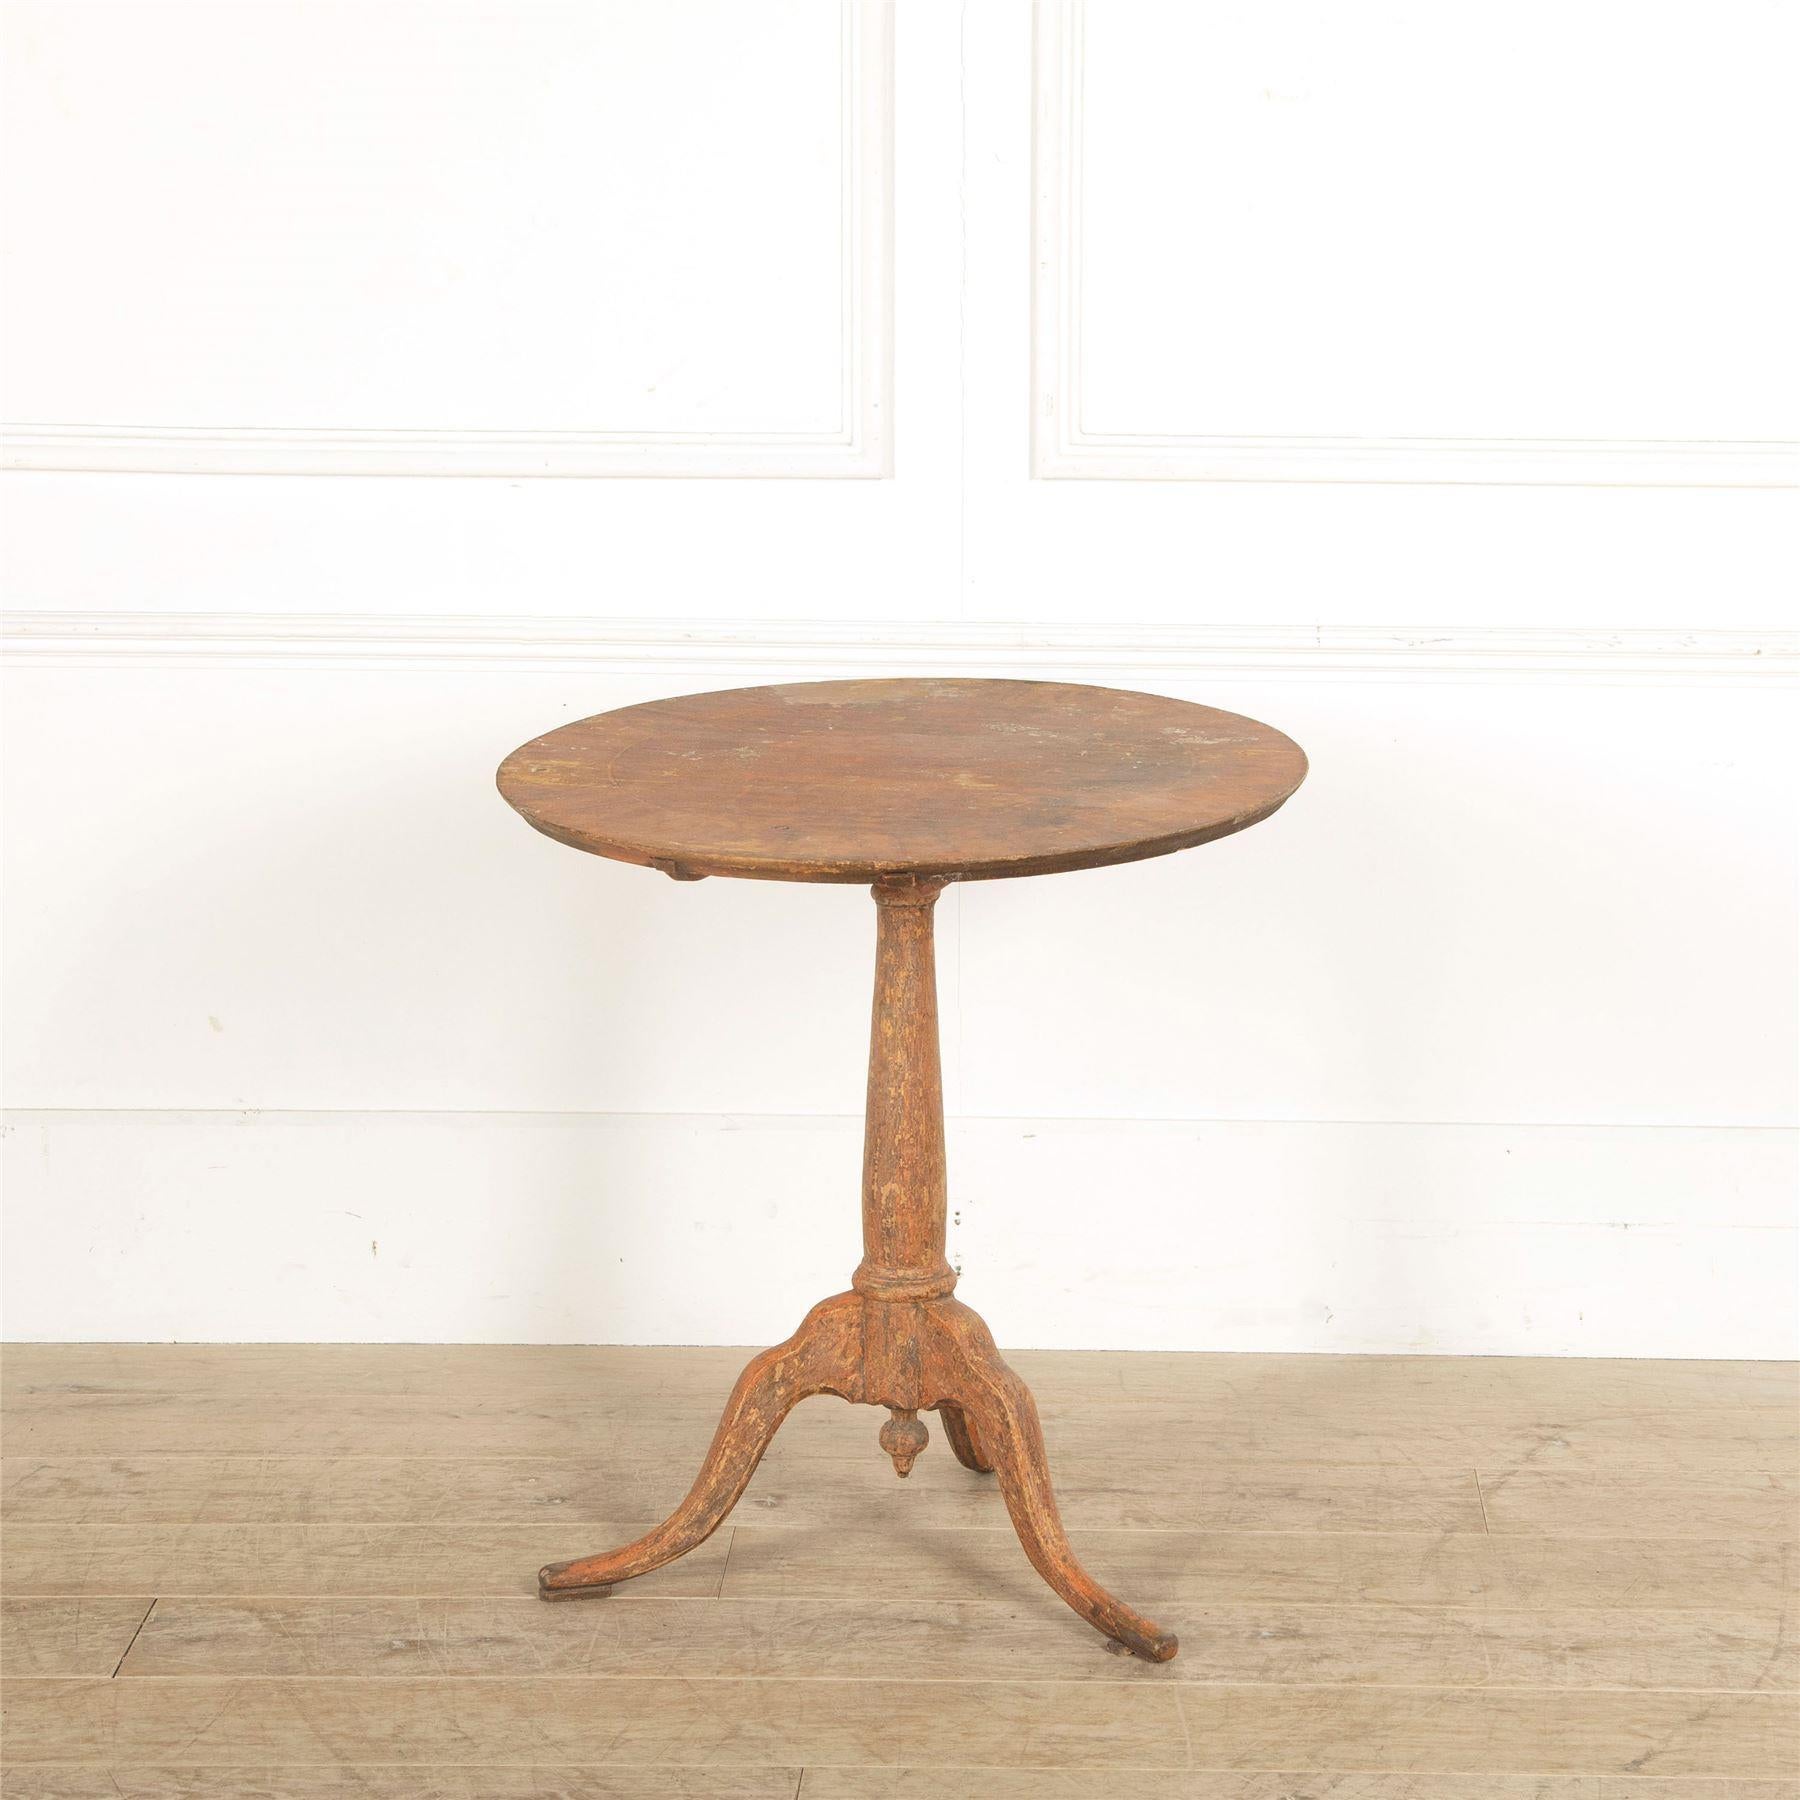 An 18th century Swedish tilt-top table scraped to original paint.